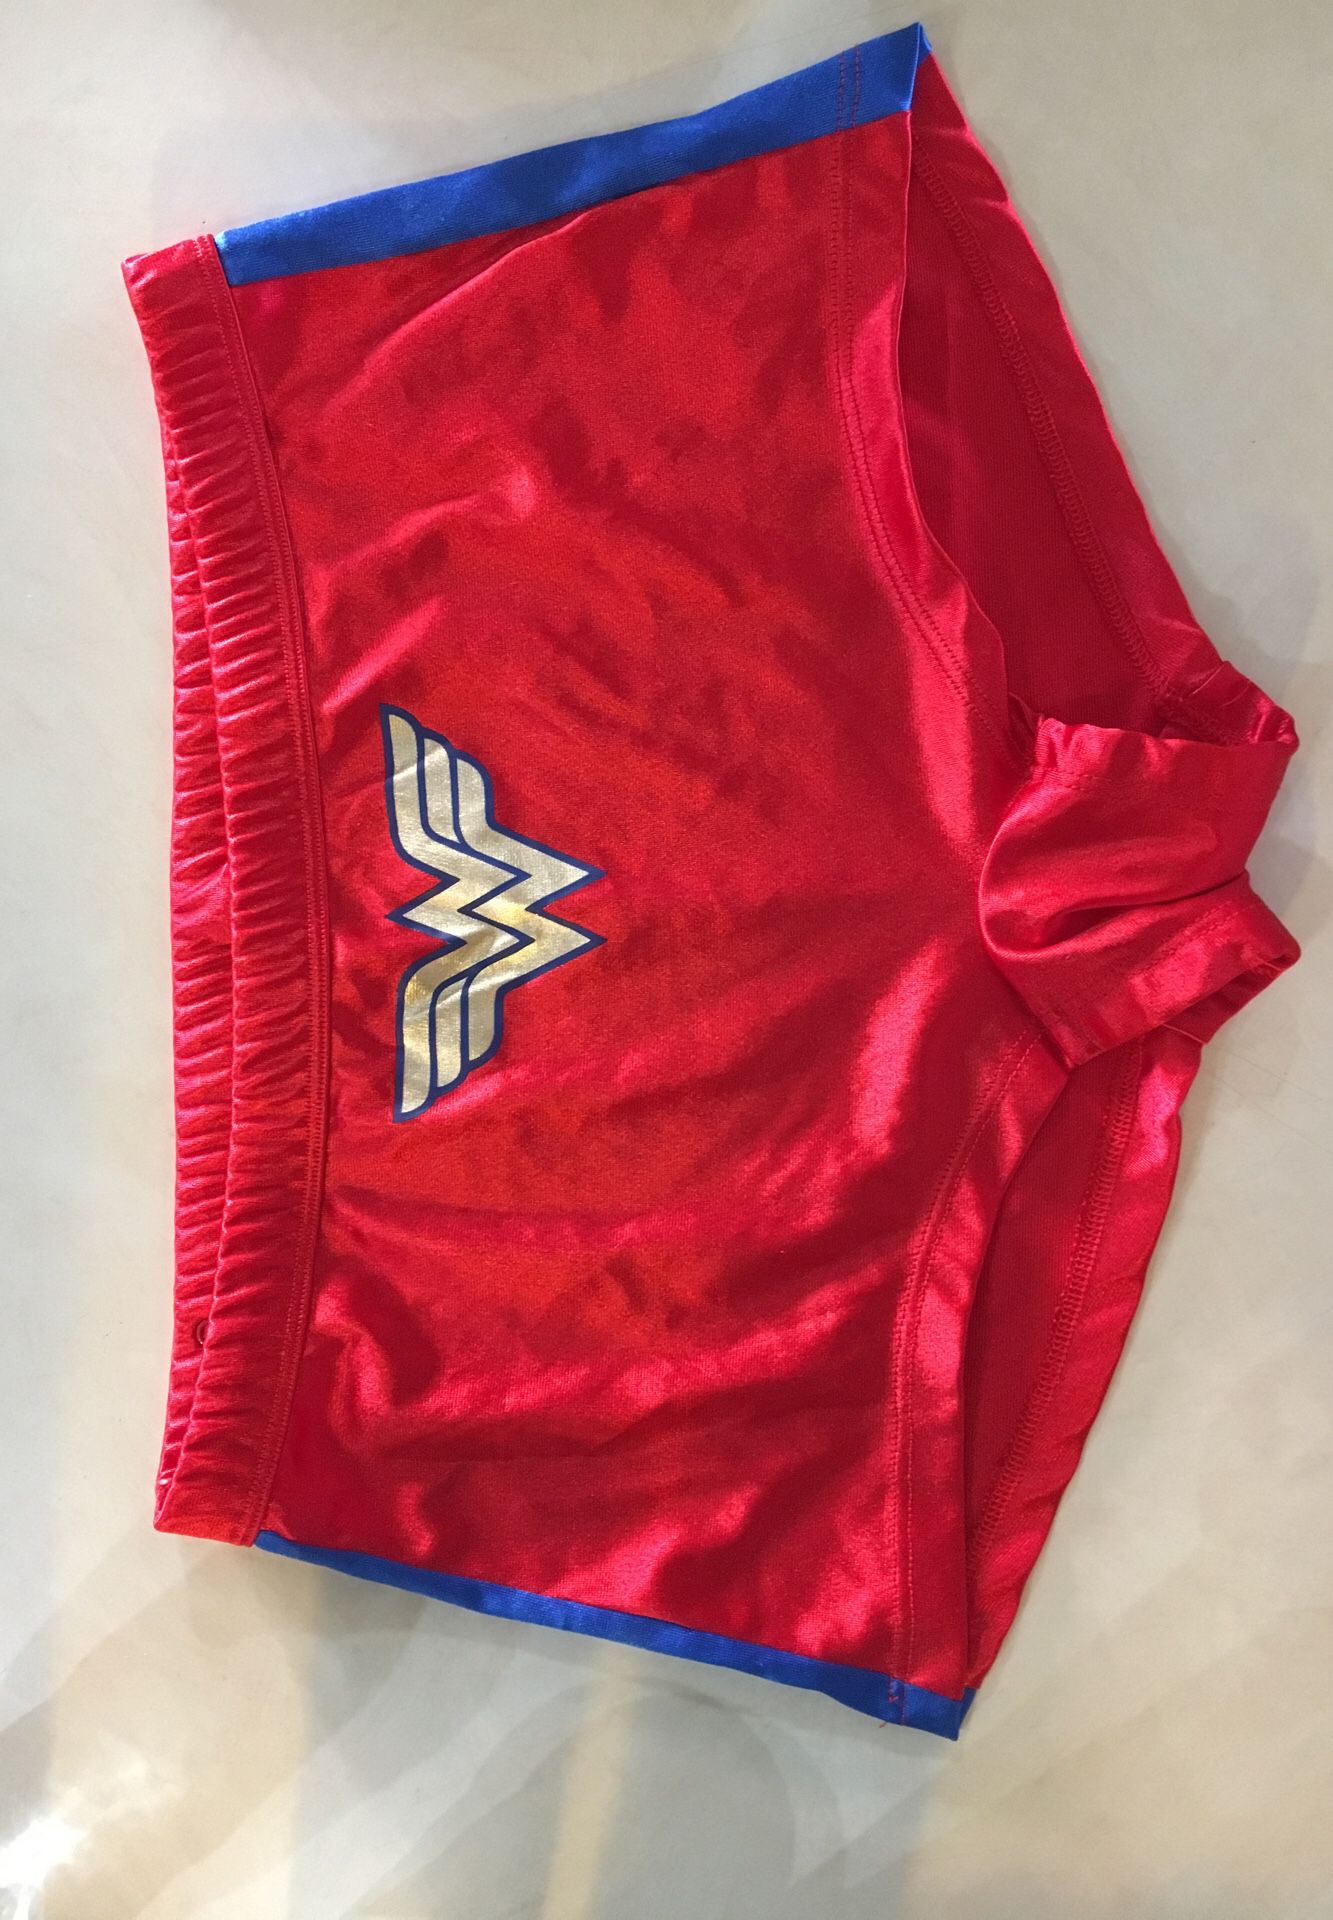 Wonder Woman costume shorts